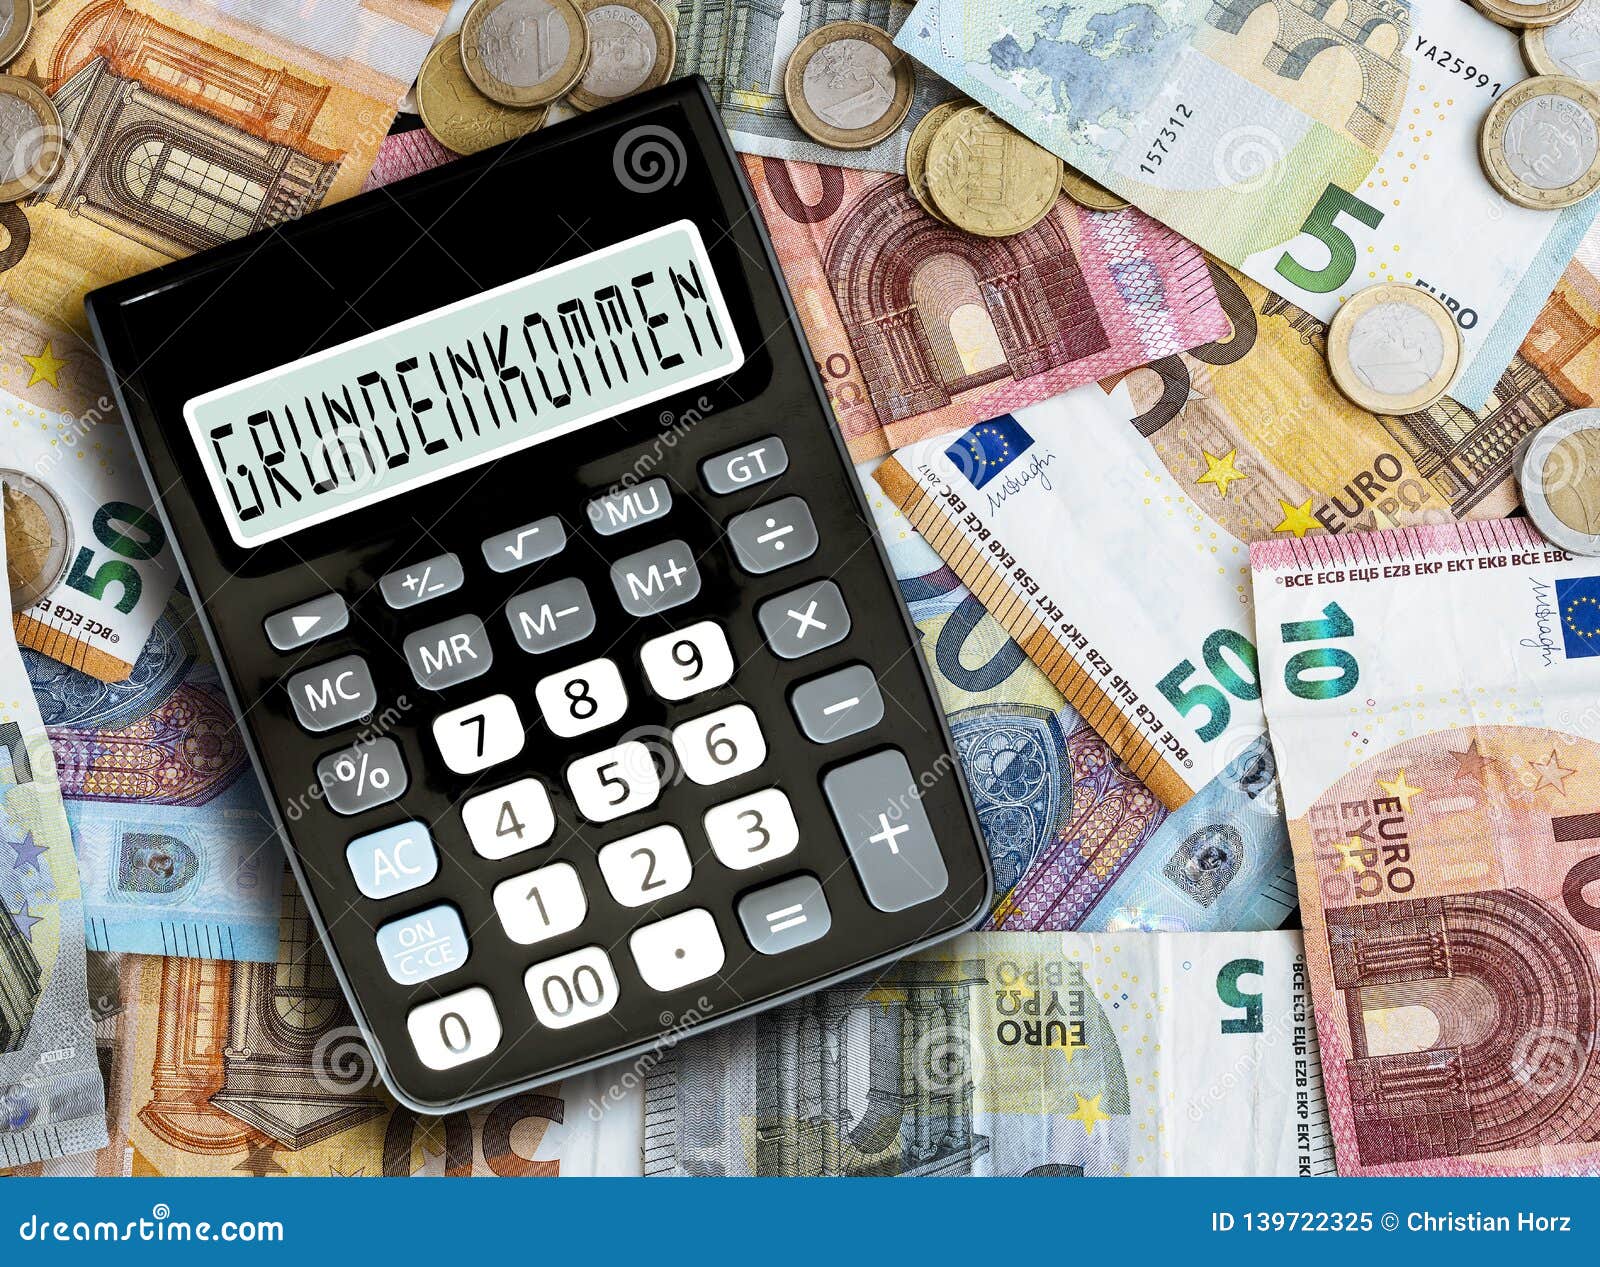 german word grundeinkommen basic income written on display of pocket calculator against cash money on table